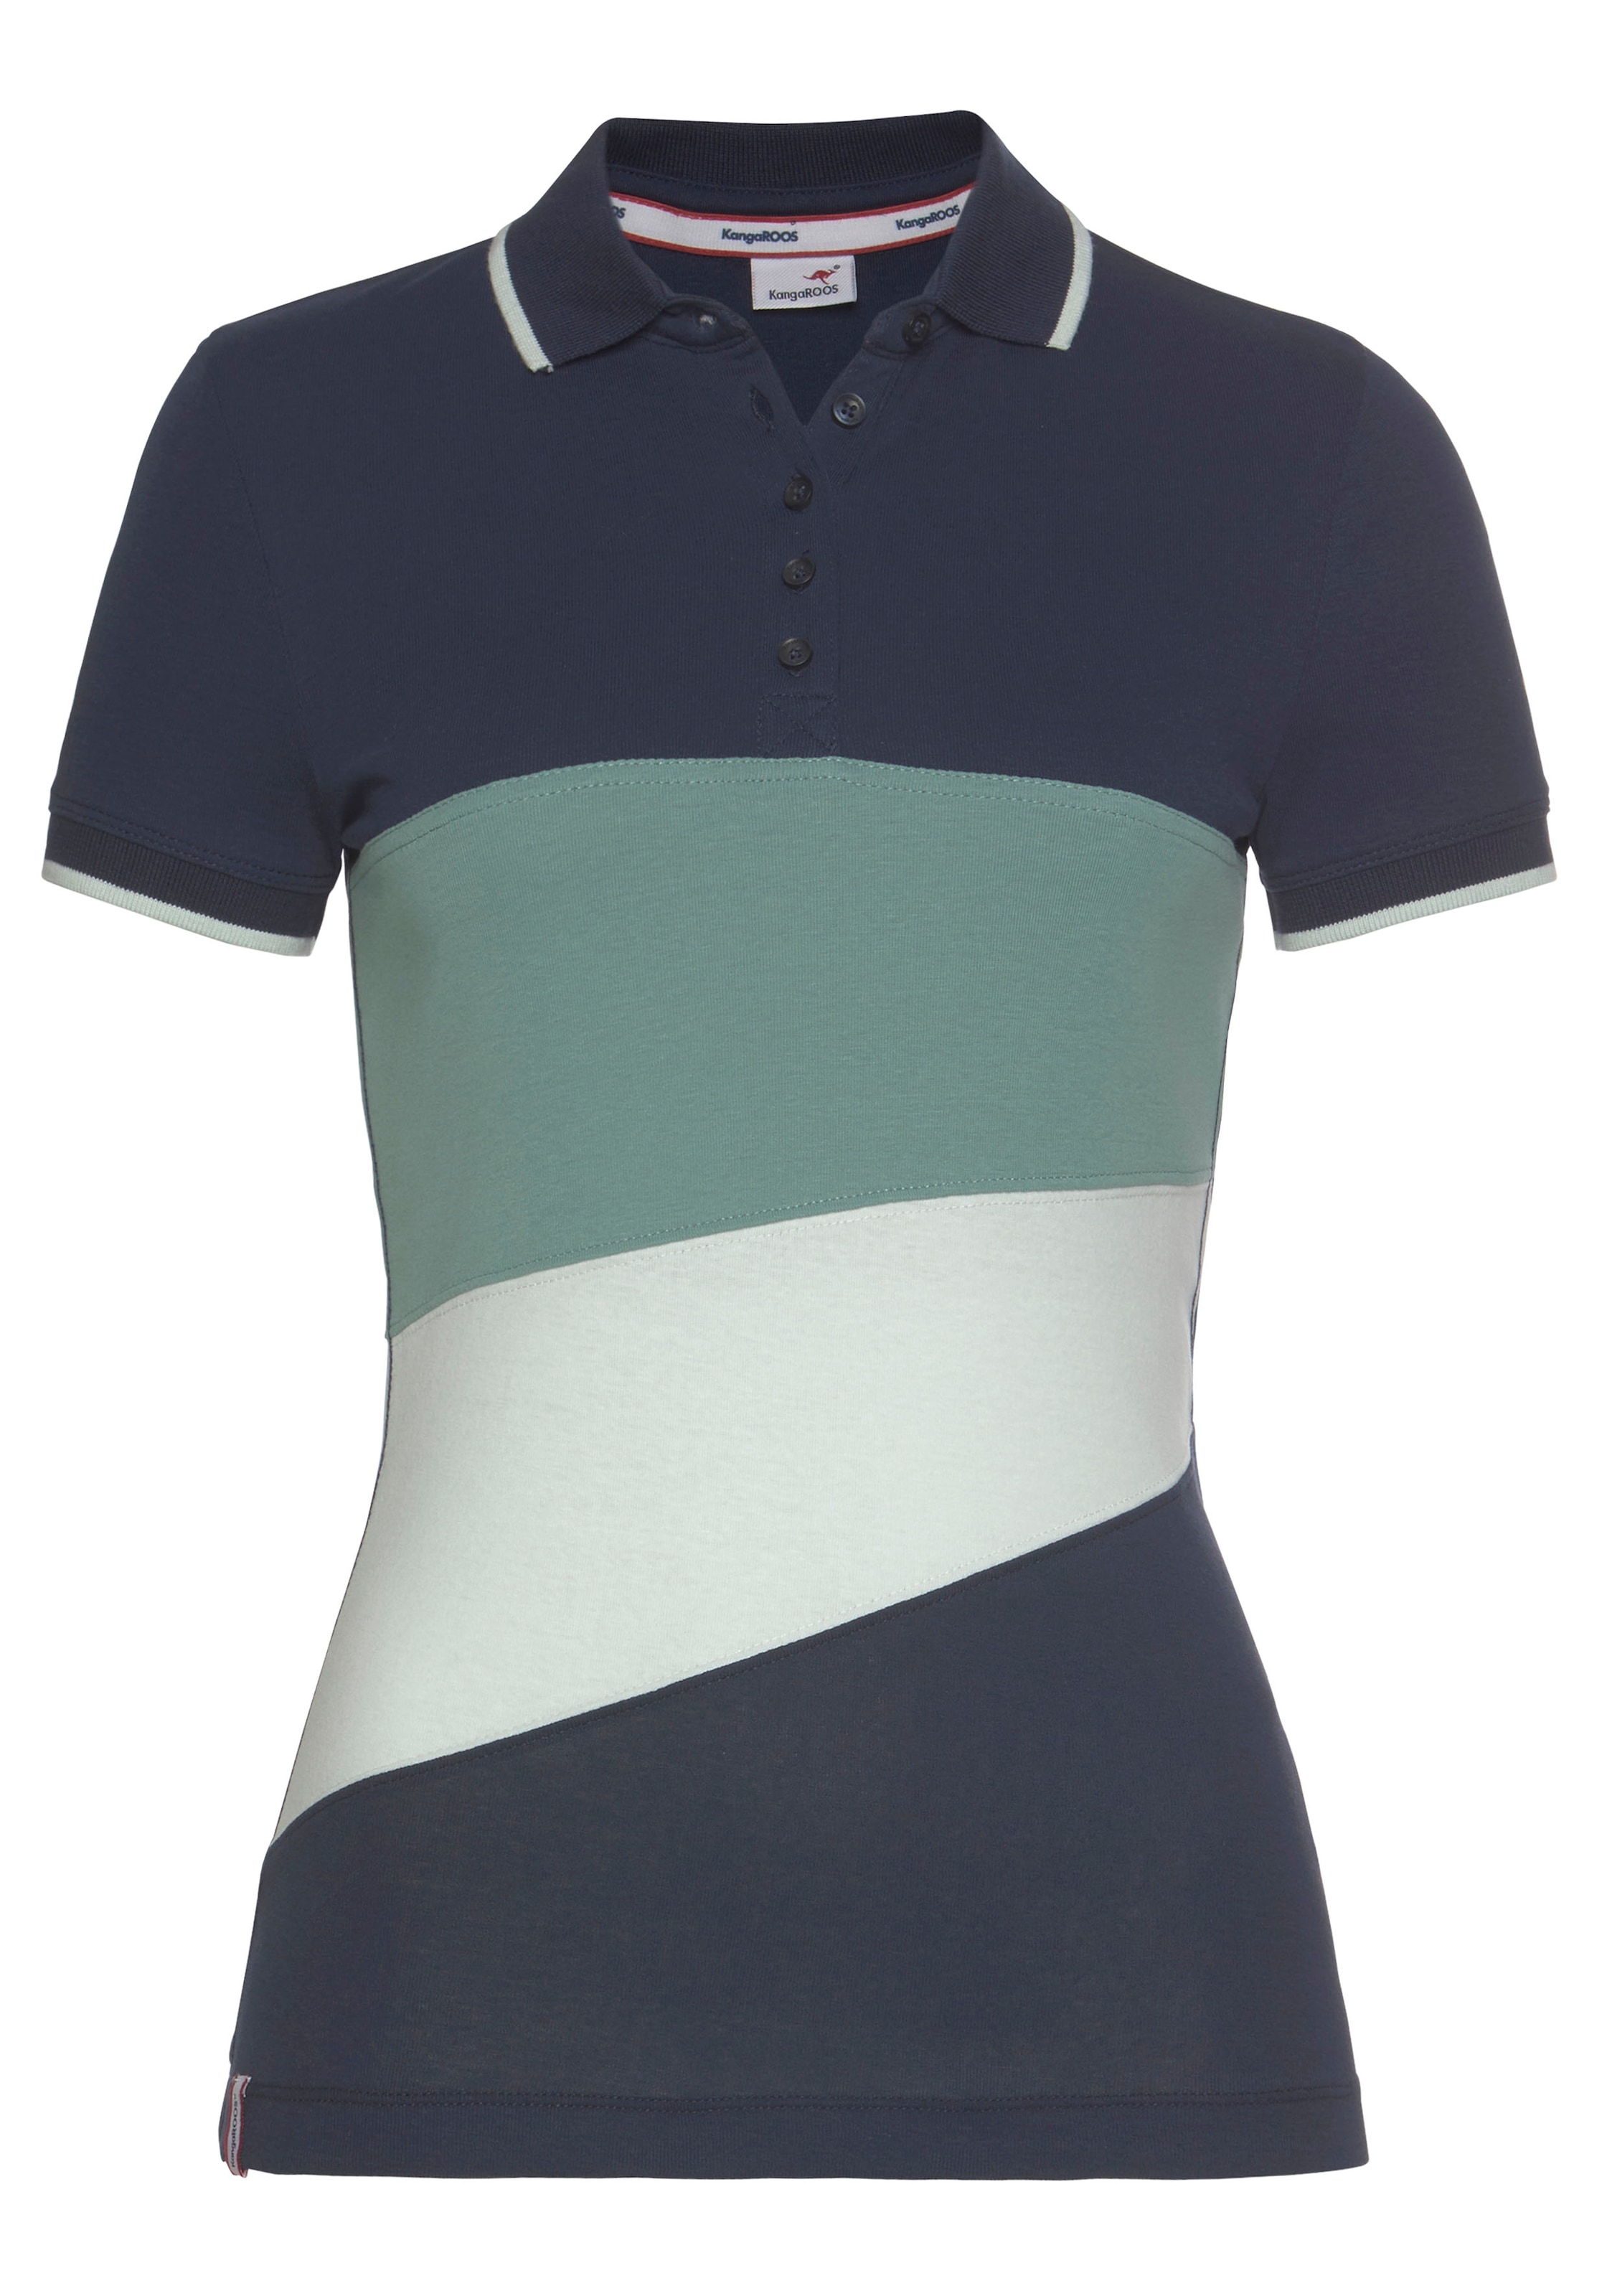 KangaROOS mit Poloshirt, im Online-Shop Colorblocking bestellen